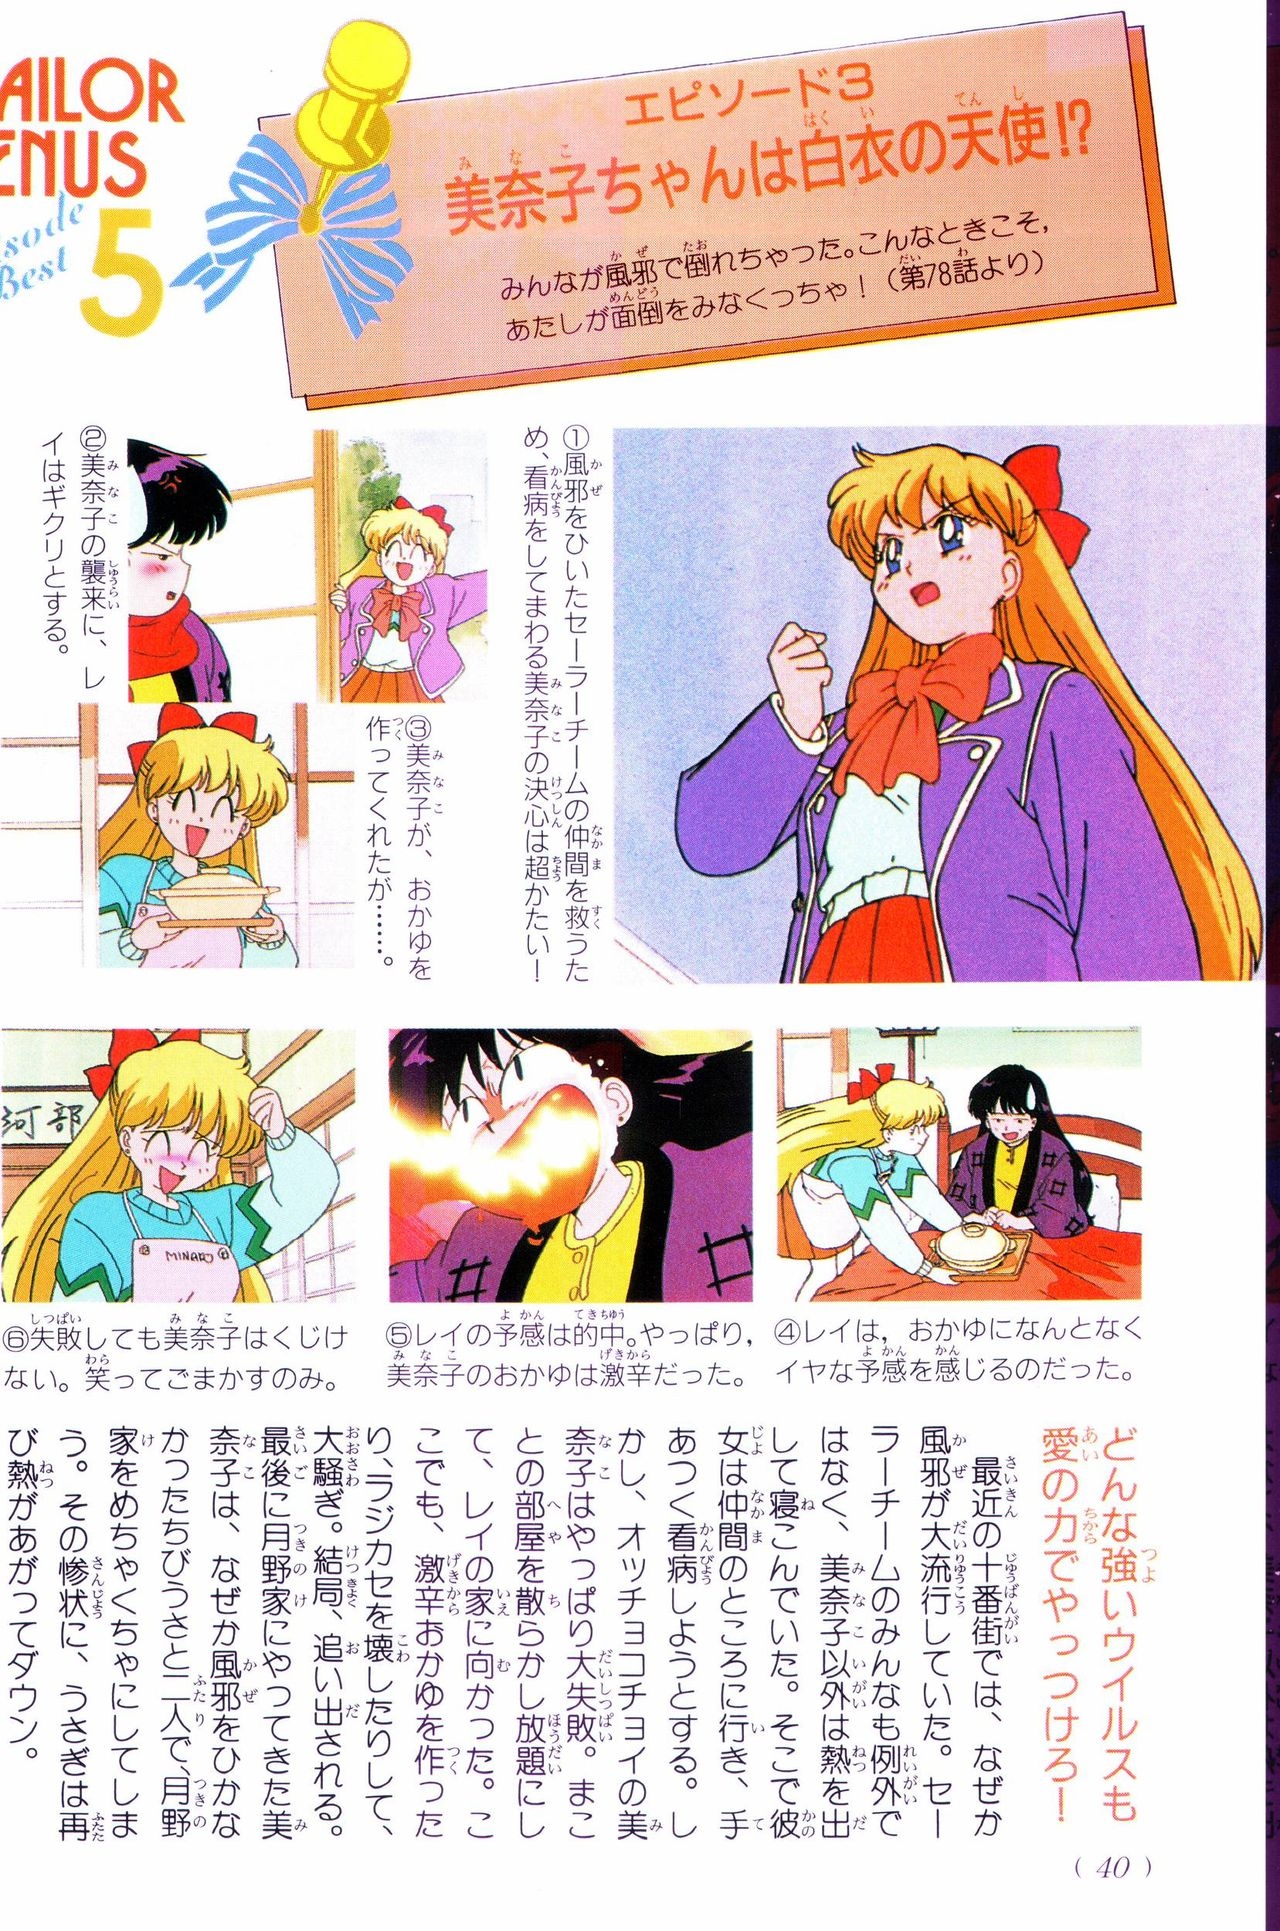 Sailor Moon Official Fan Book - Sailor Venus 54